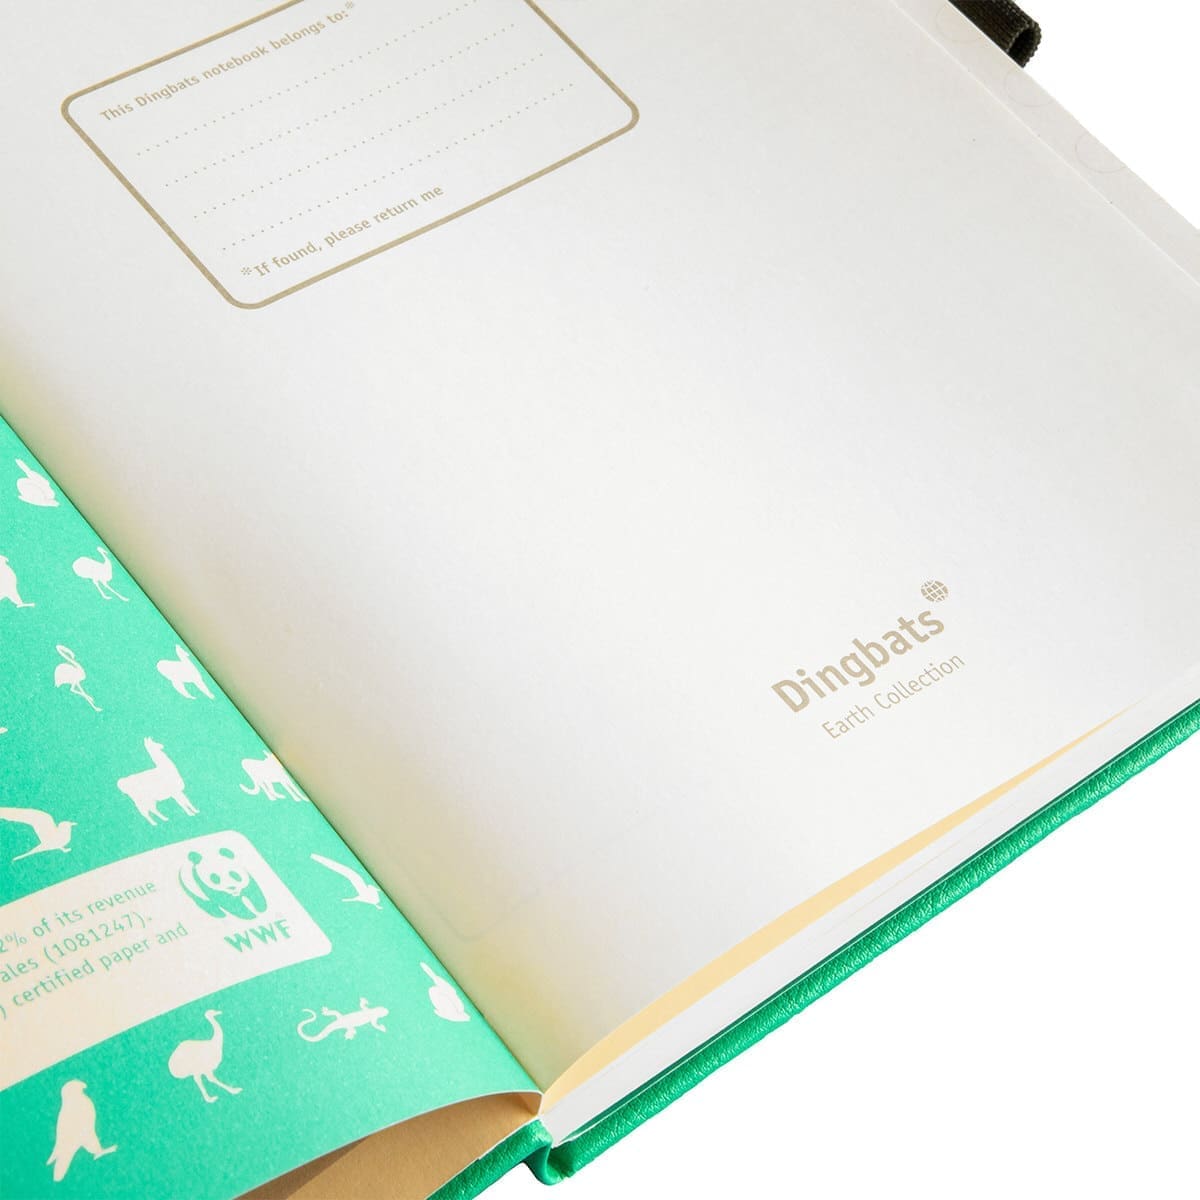 Dotted notebook Earth Collection - Emerald Eduardo Avaroa - Dingbats* - Tidformera